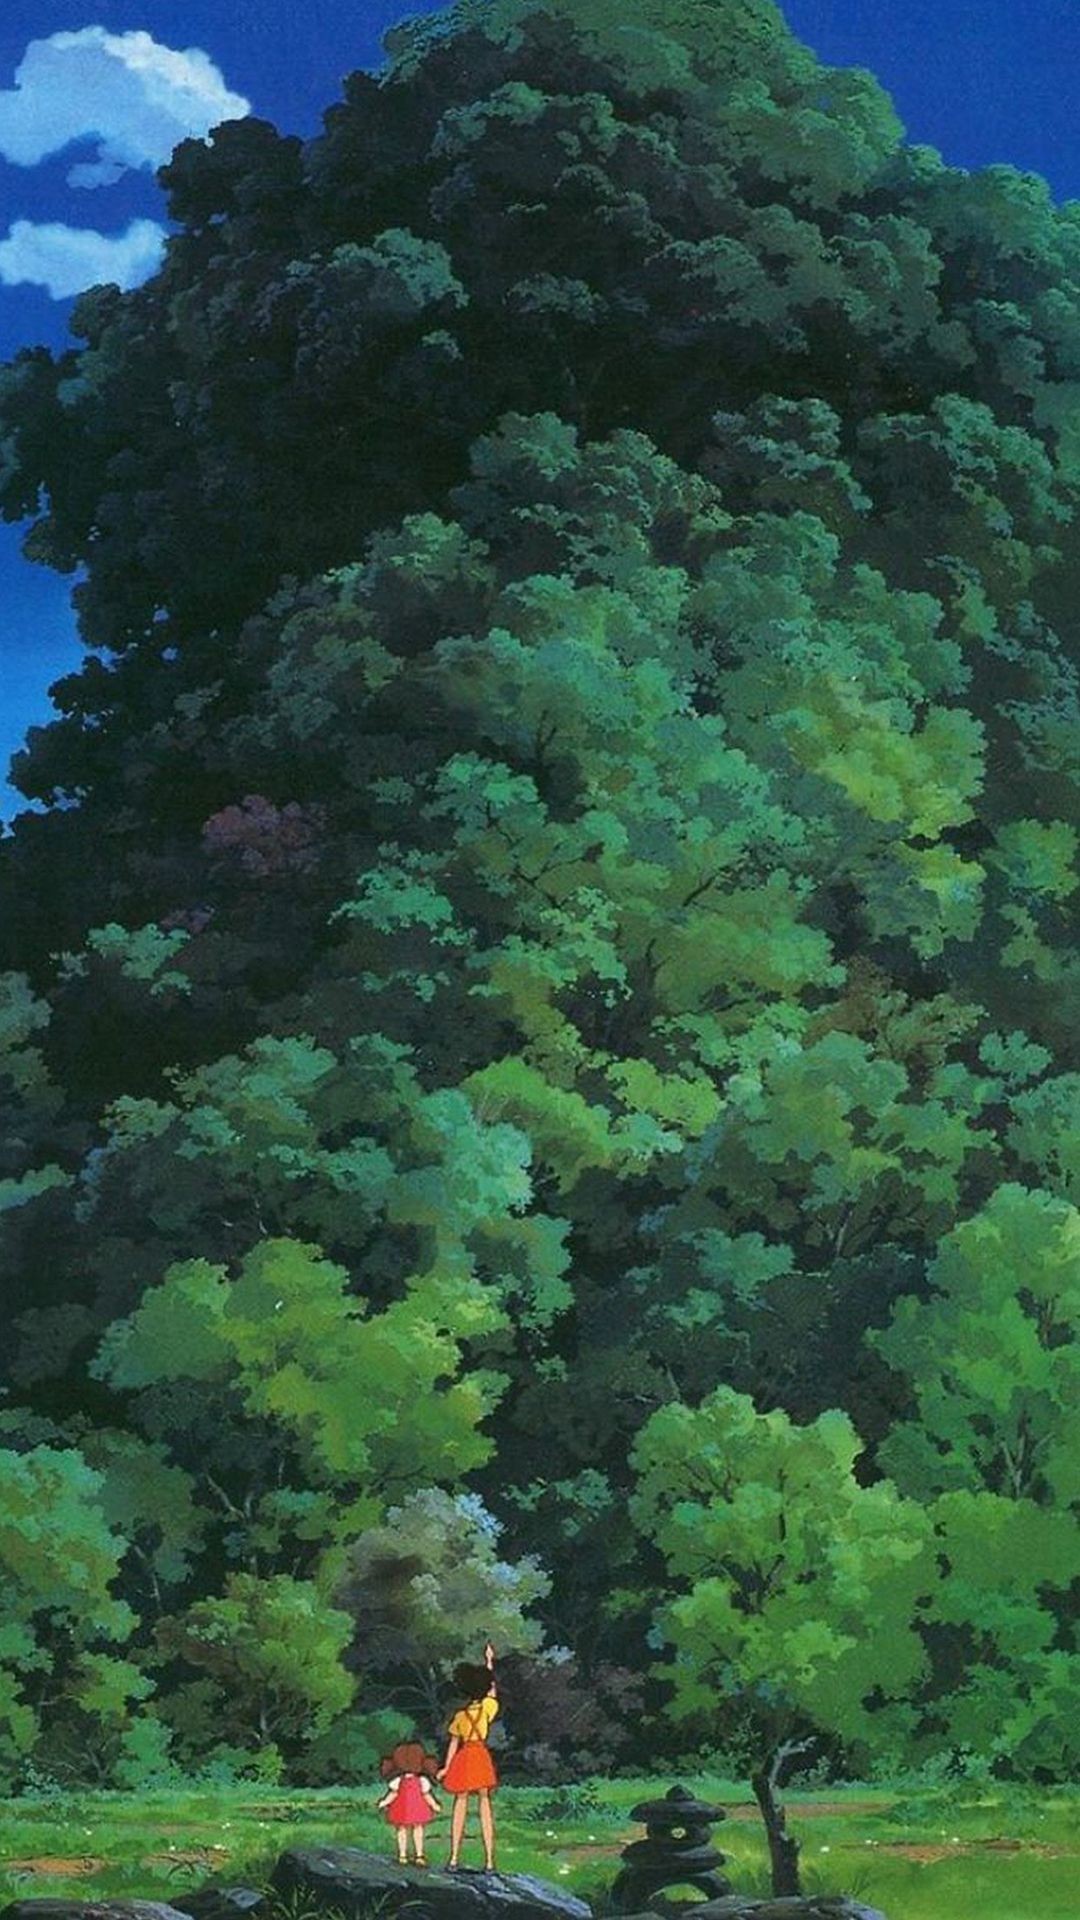 Studio Ghibli phone wallpaper and backgrounds